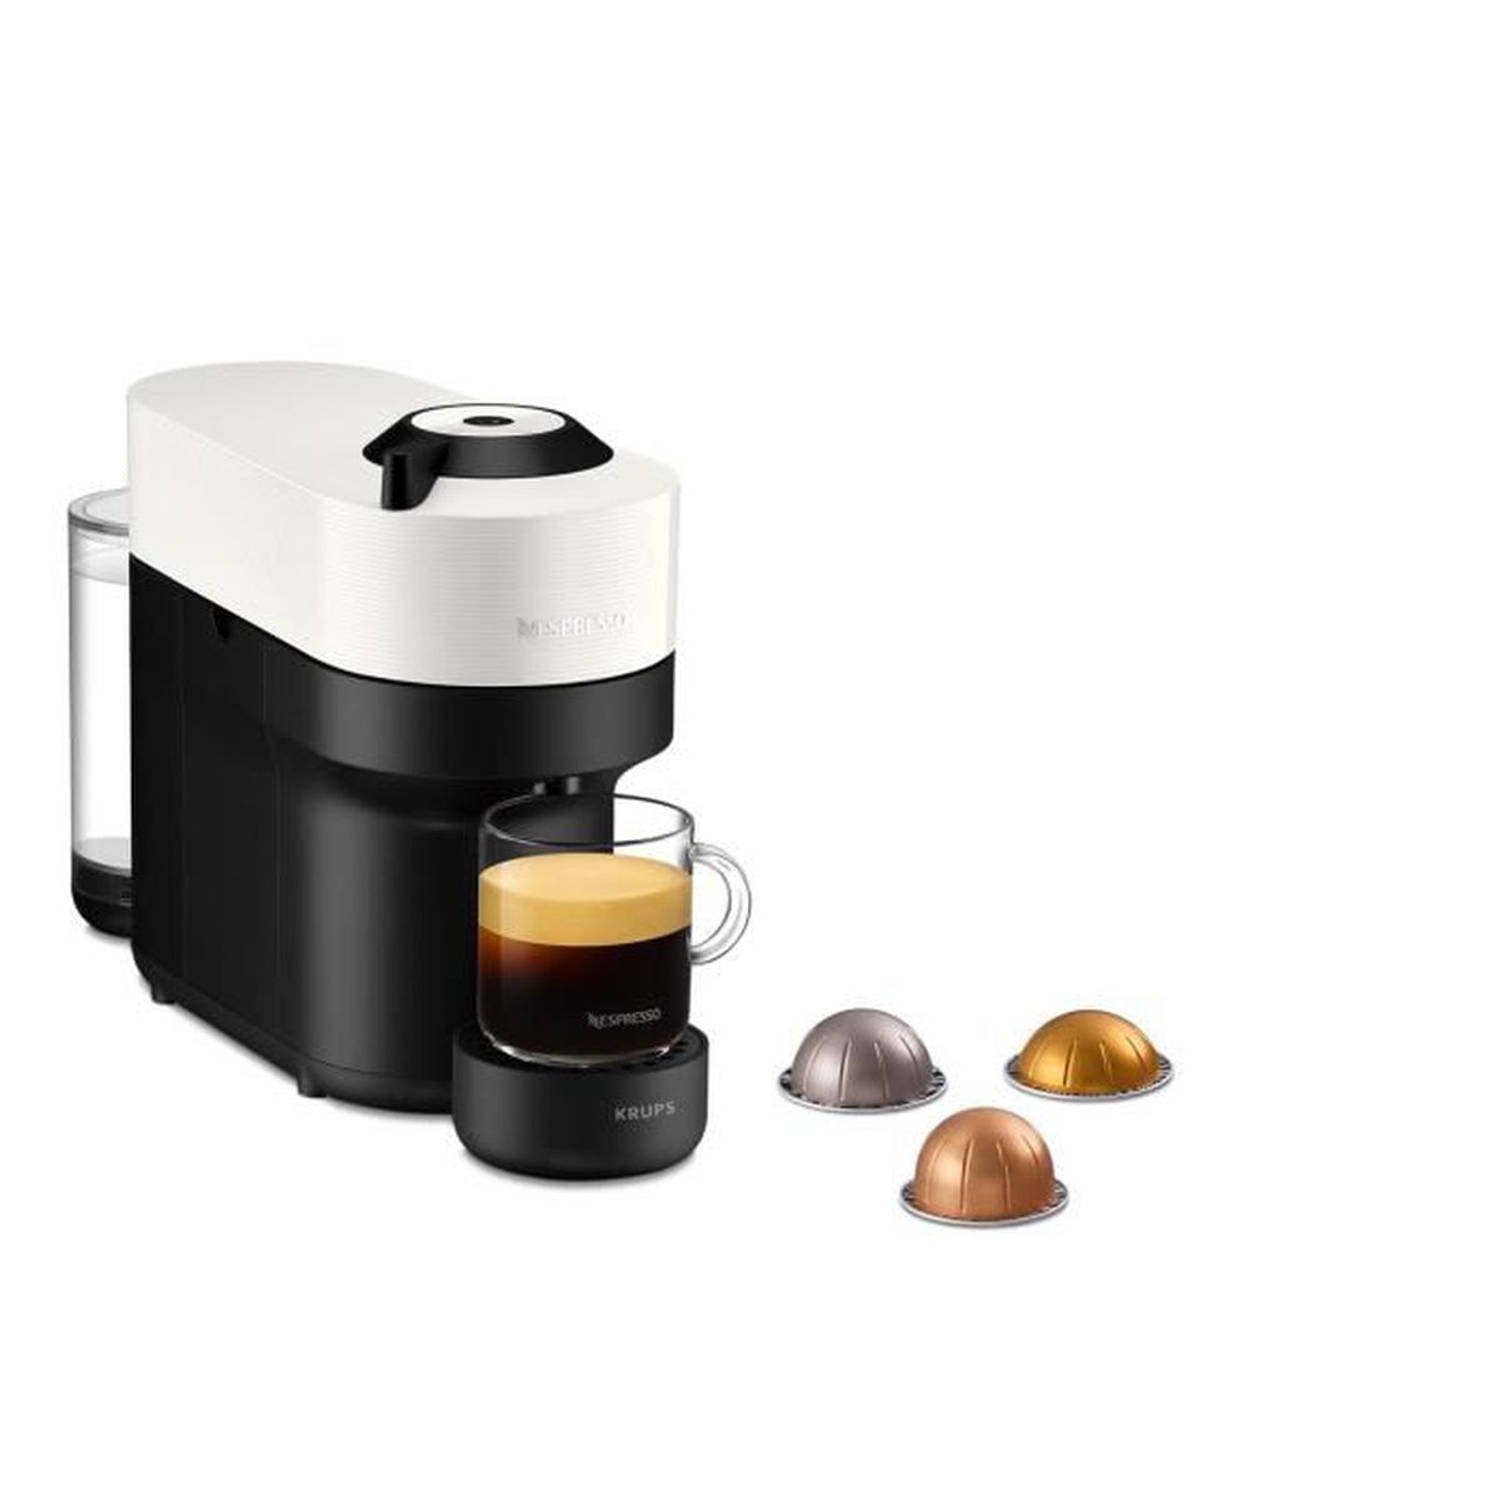 Krups Nespresso YY4889fd Virtue White Pop Coffee Capsules, Compact Coffee Maker, 4 Cup Maten, Espres